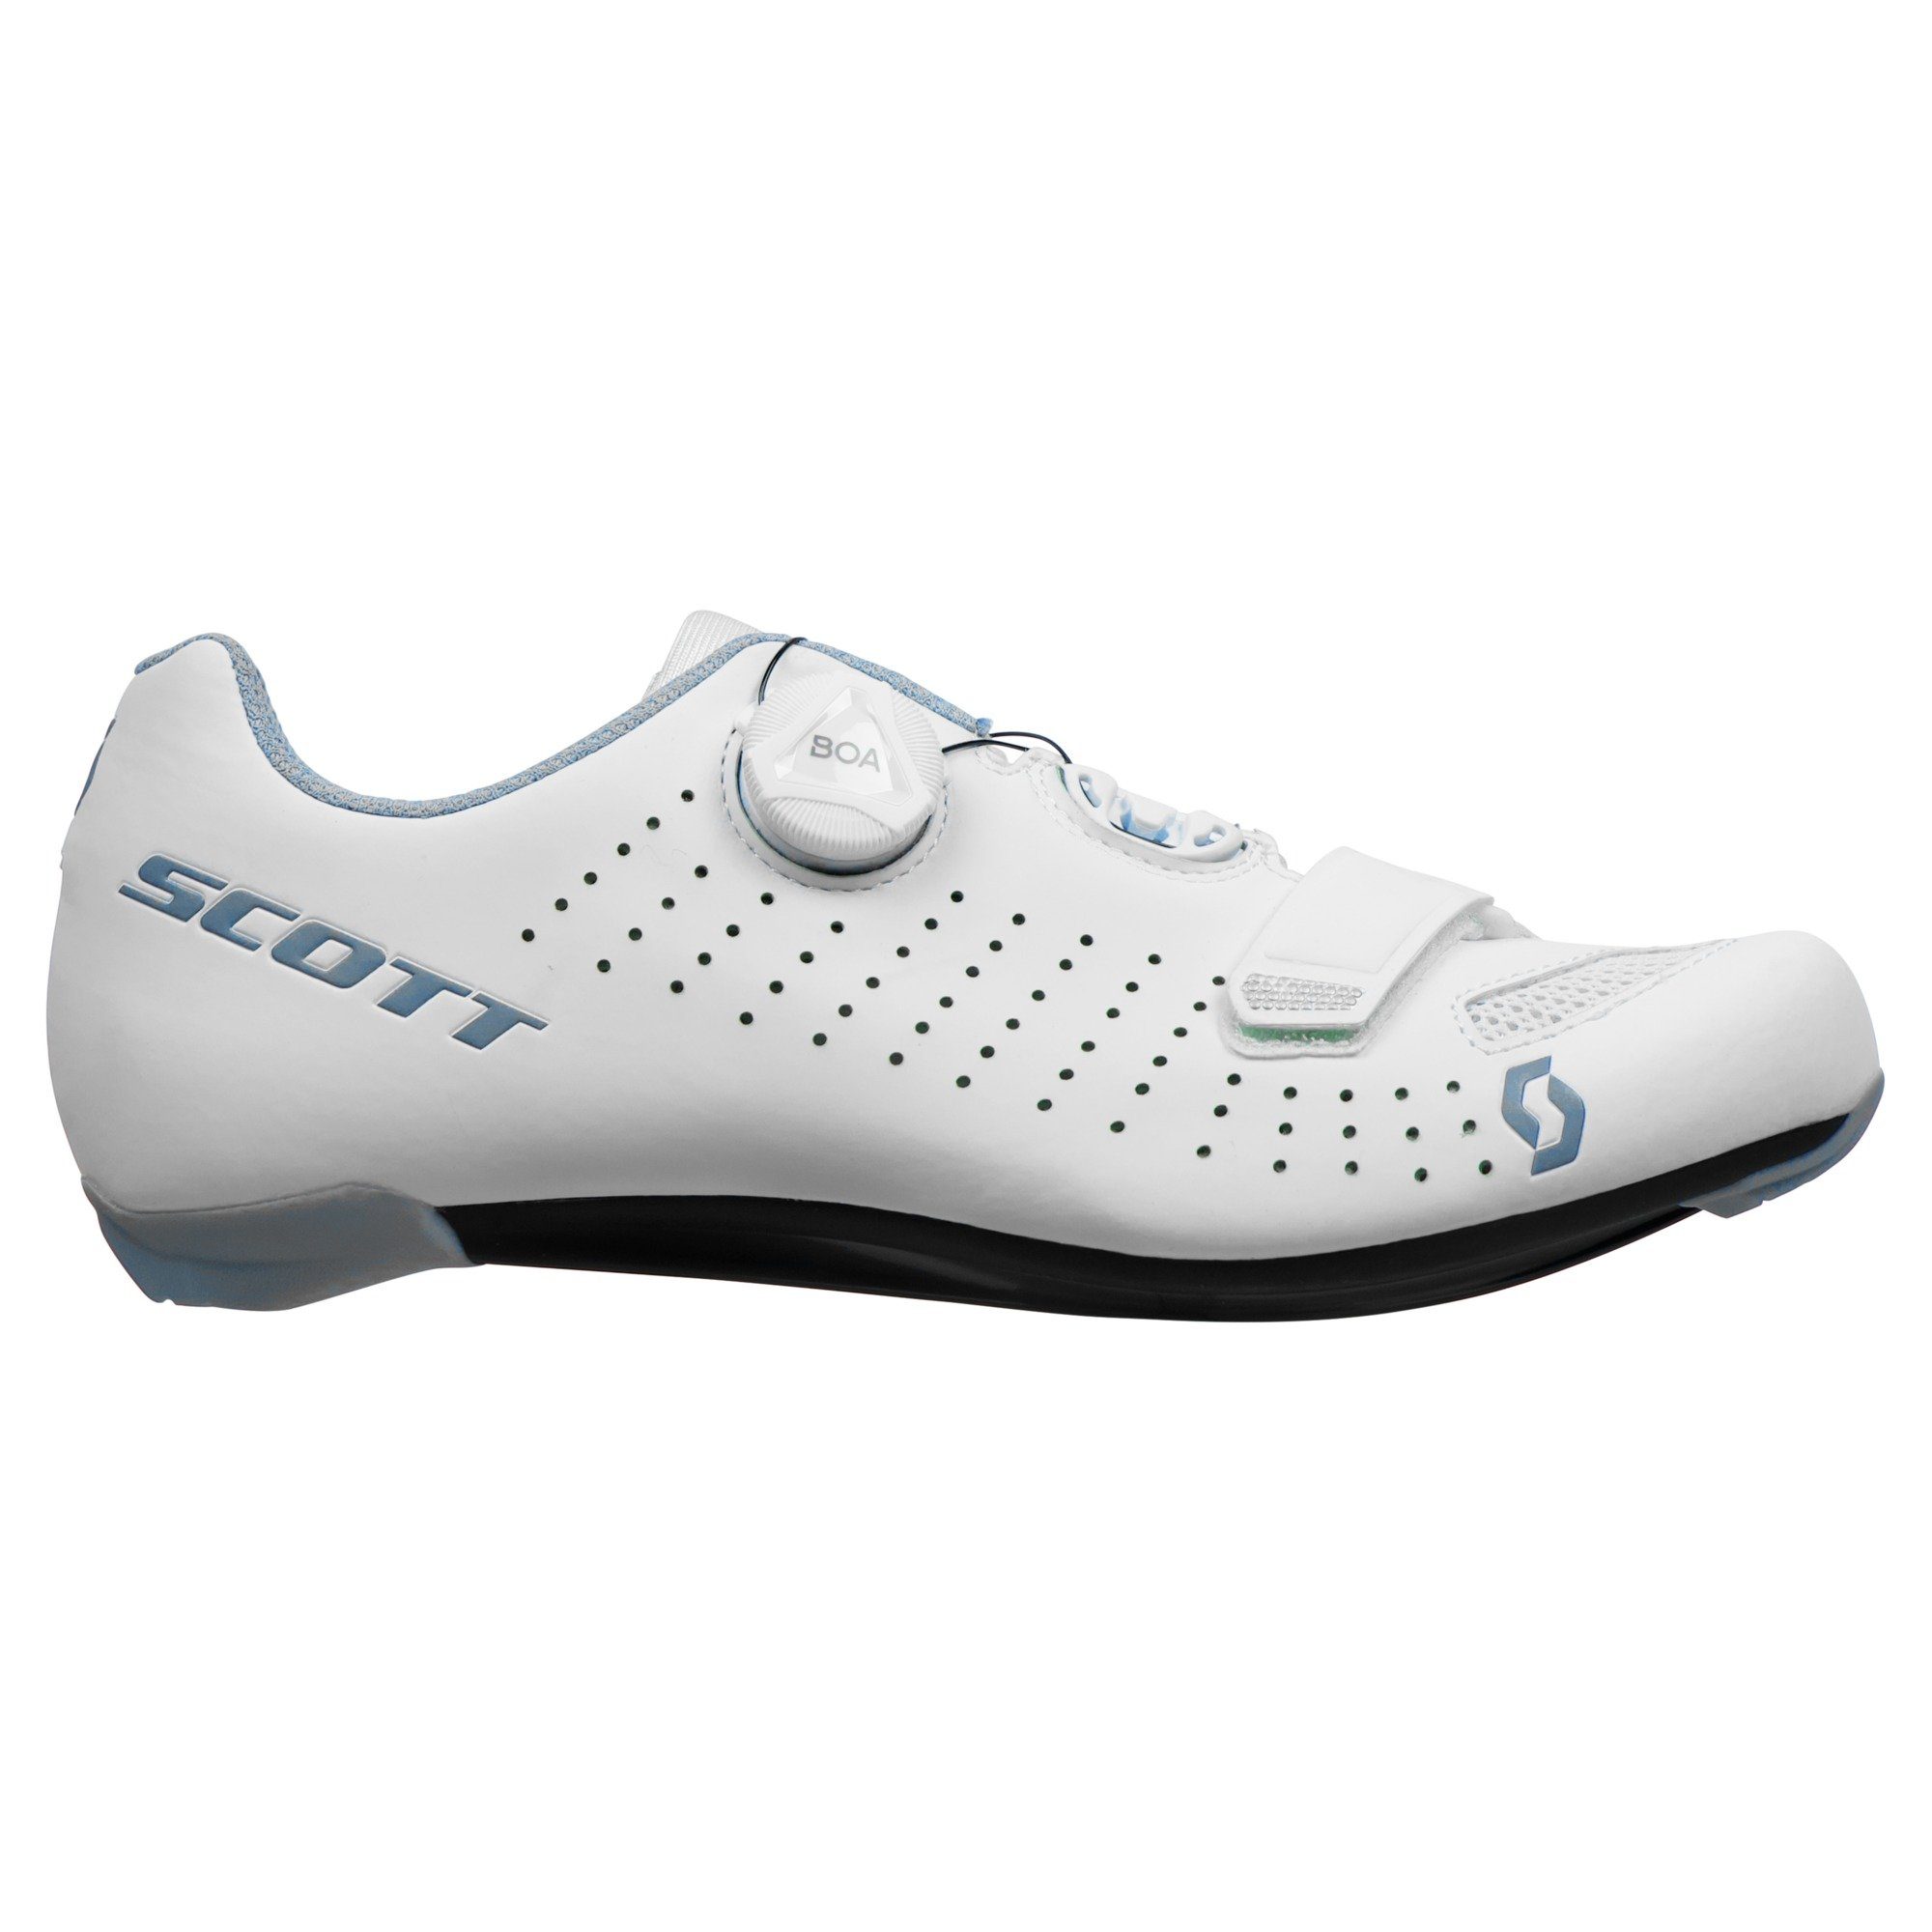 Scott Scott Fahrradschuhe Road Comp Boa Lady Fahrradschuh weiß/hellblau | Fahrradschuhe